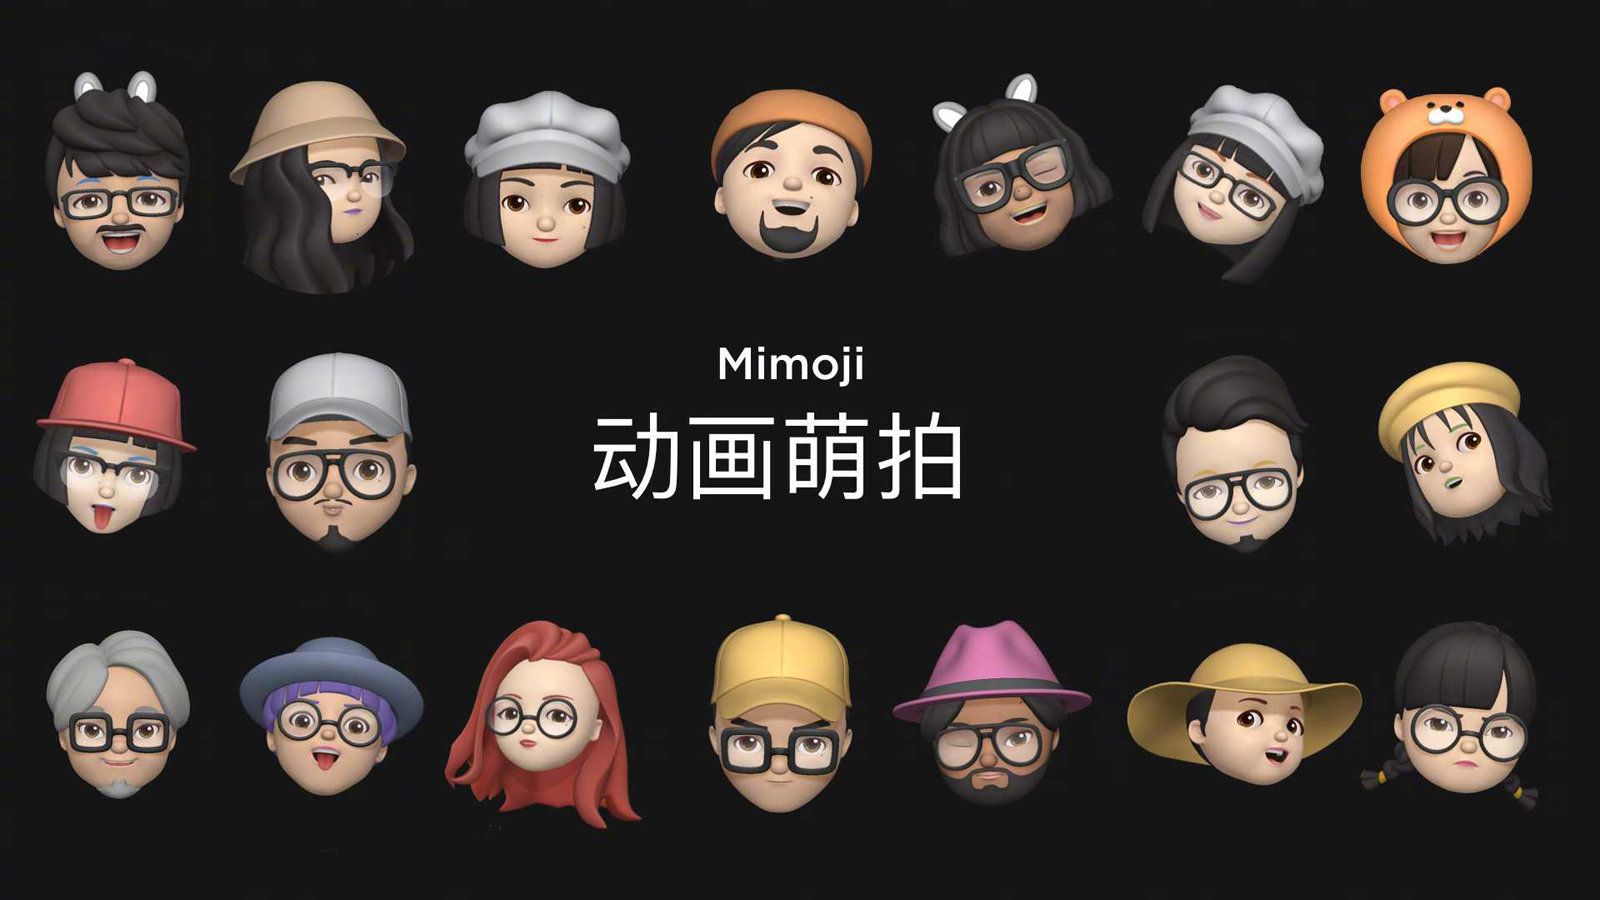 Apple ไม่ถูกใจสิ่งนี้.. Xiaomi เปิดตัว “Mimoji” อิโมจิ 3D ที่ได้แรงบันดาลใจมาจาก “Memoji”